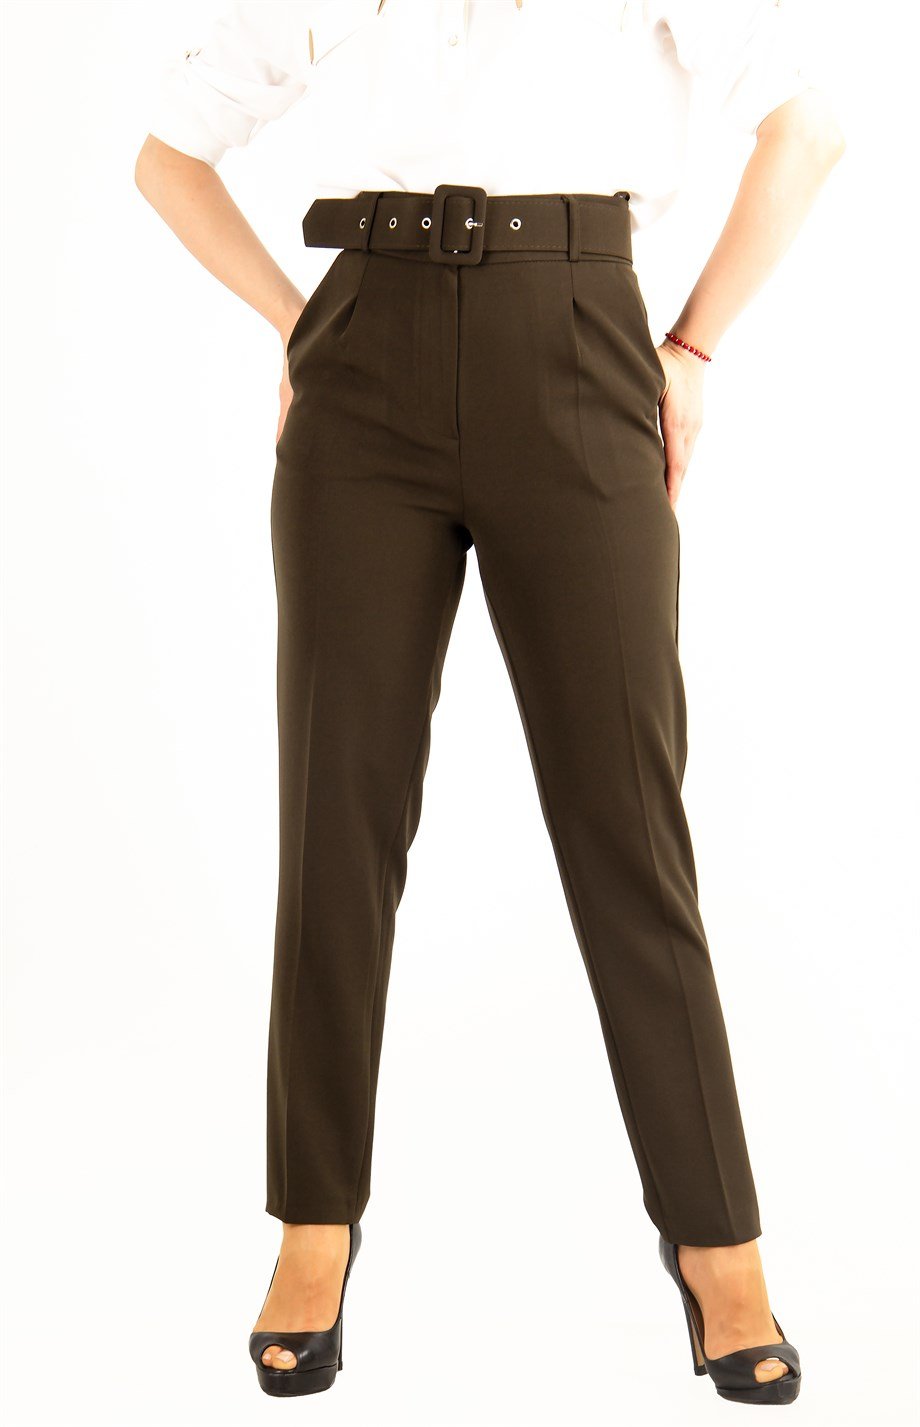 Brown trousers/pants/office pants